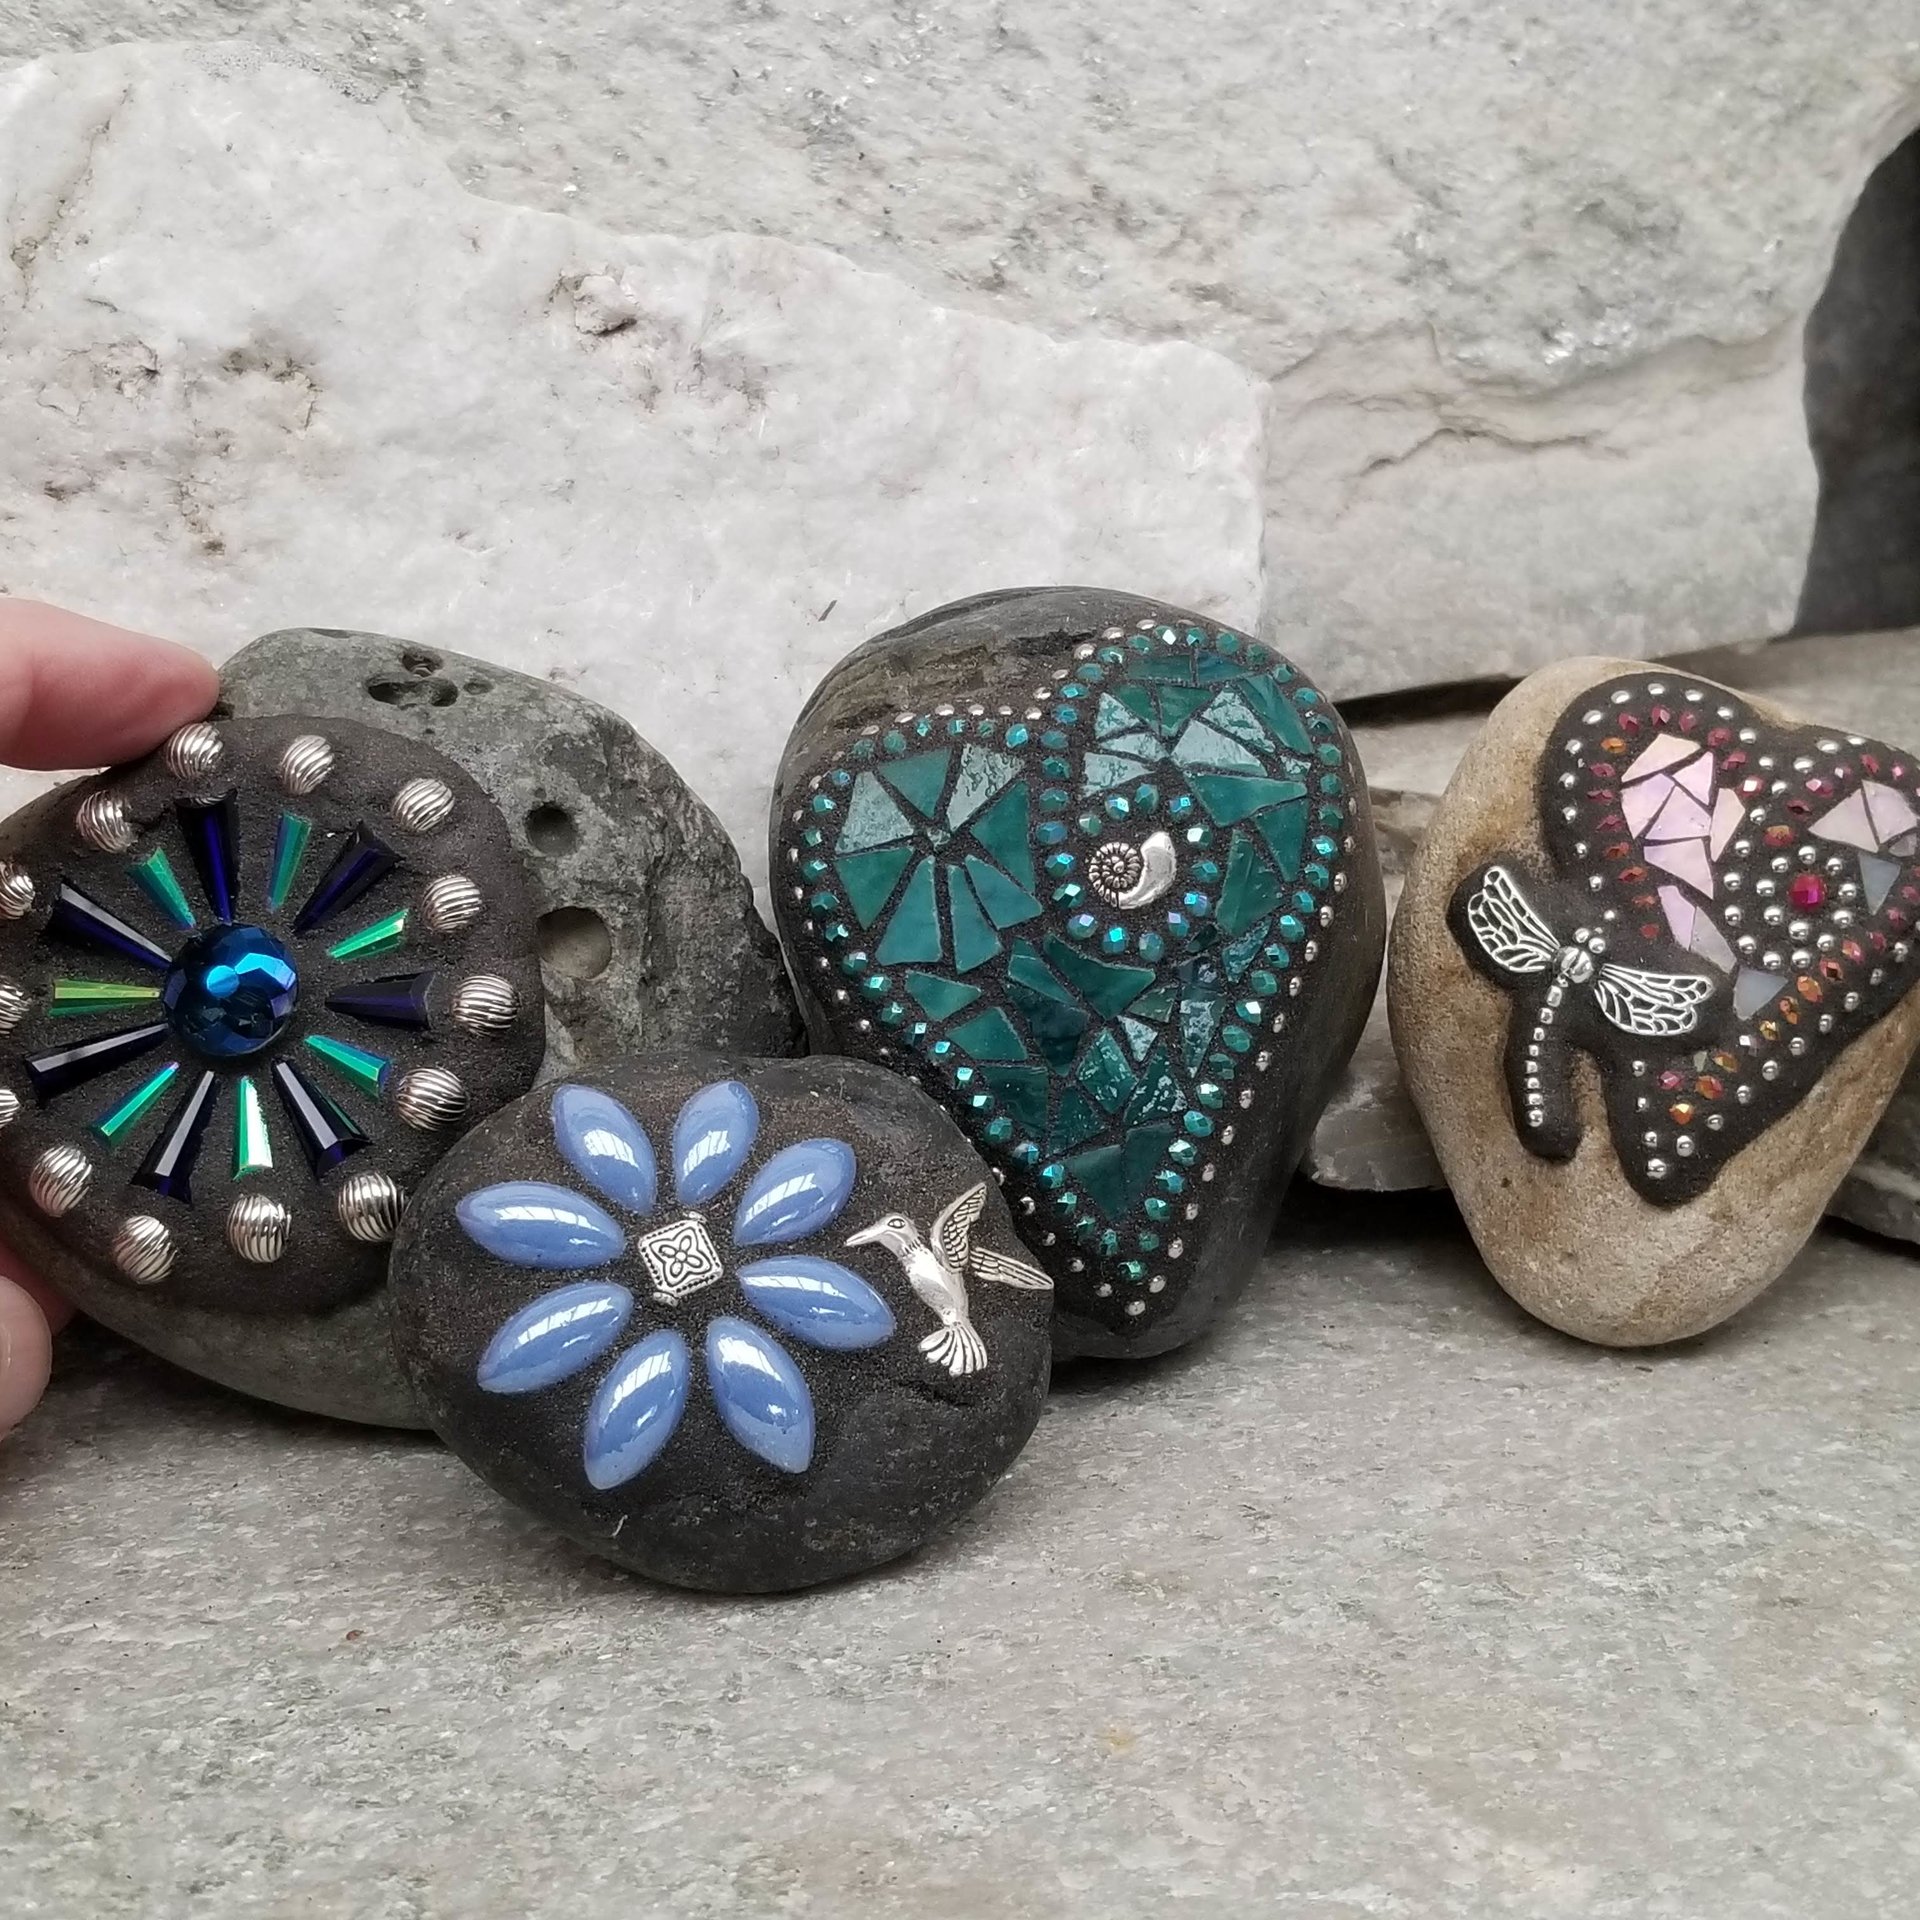 Garden Stone Paperweights, Secret Santa Stocking Stuffer, #3 Group Mosaic Heart and Rocks, Mosaic Garden Stone, Home Decor, Gardening, Gardening Gift,